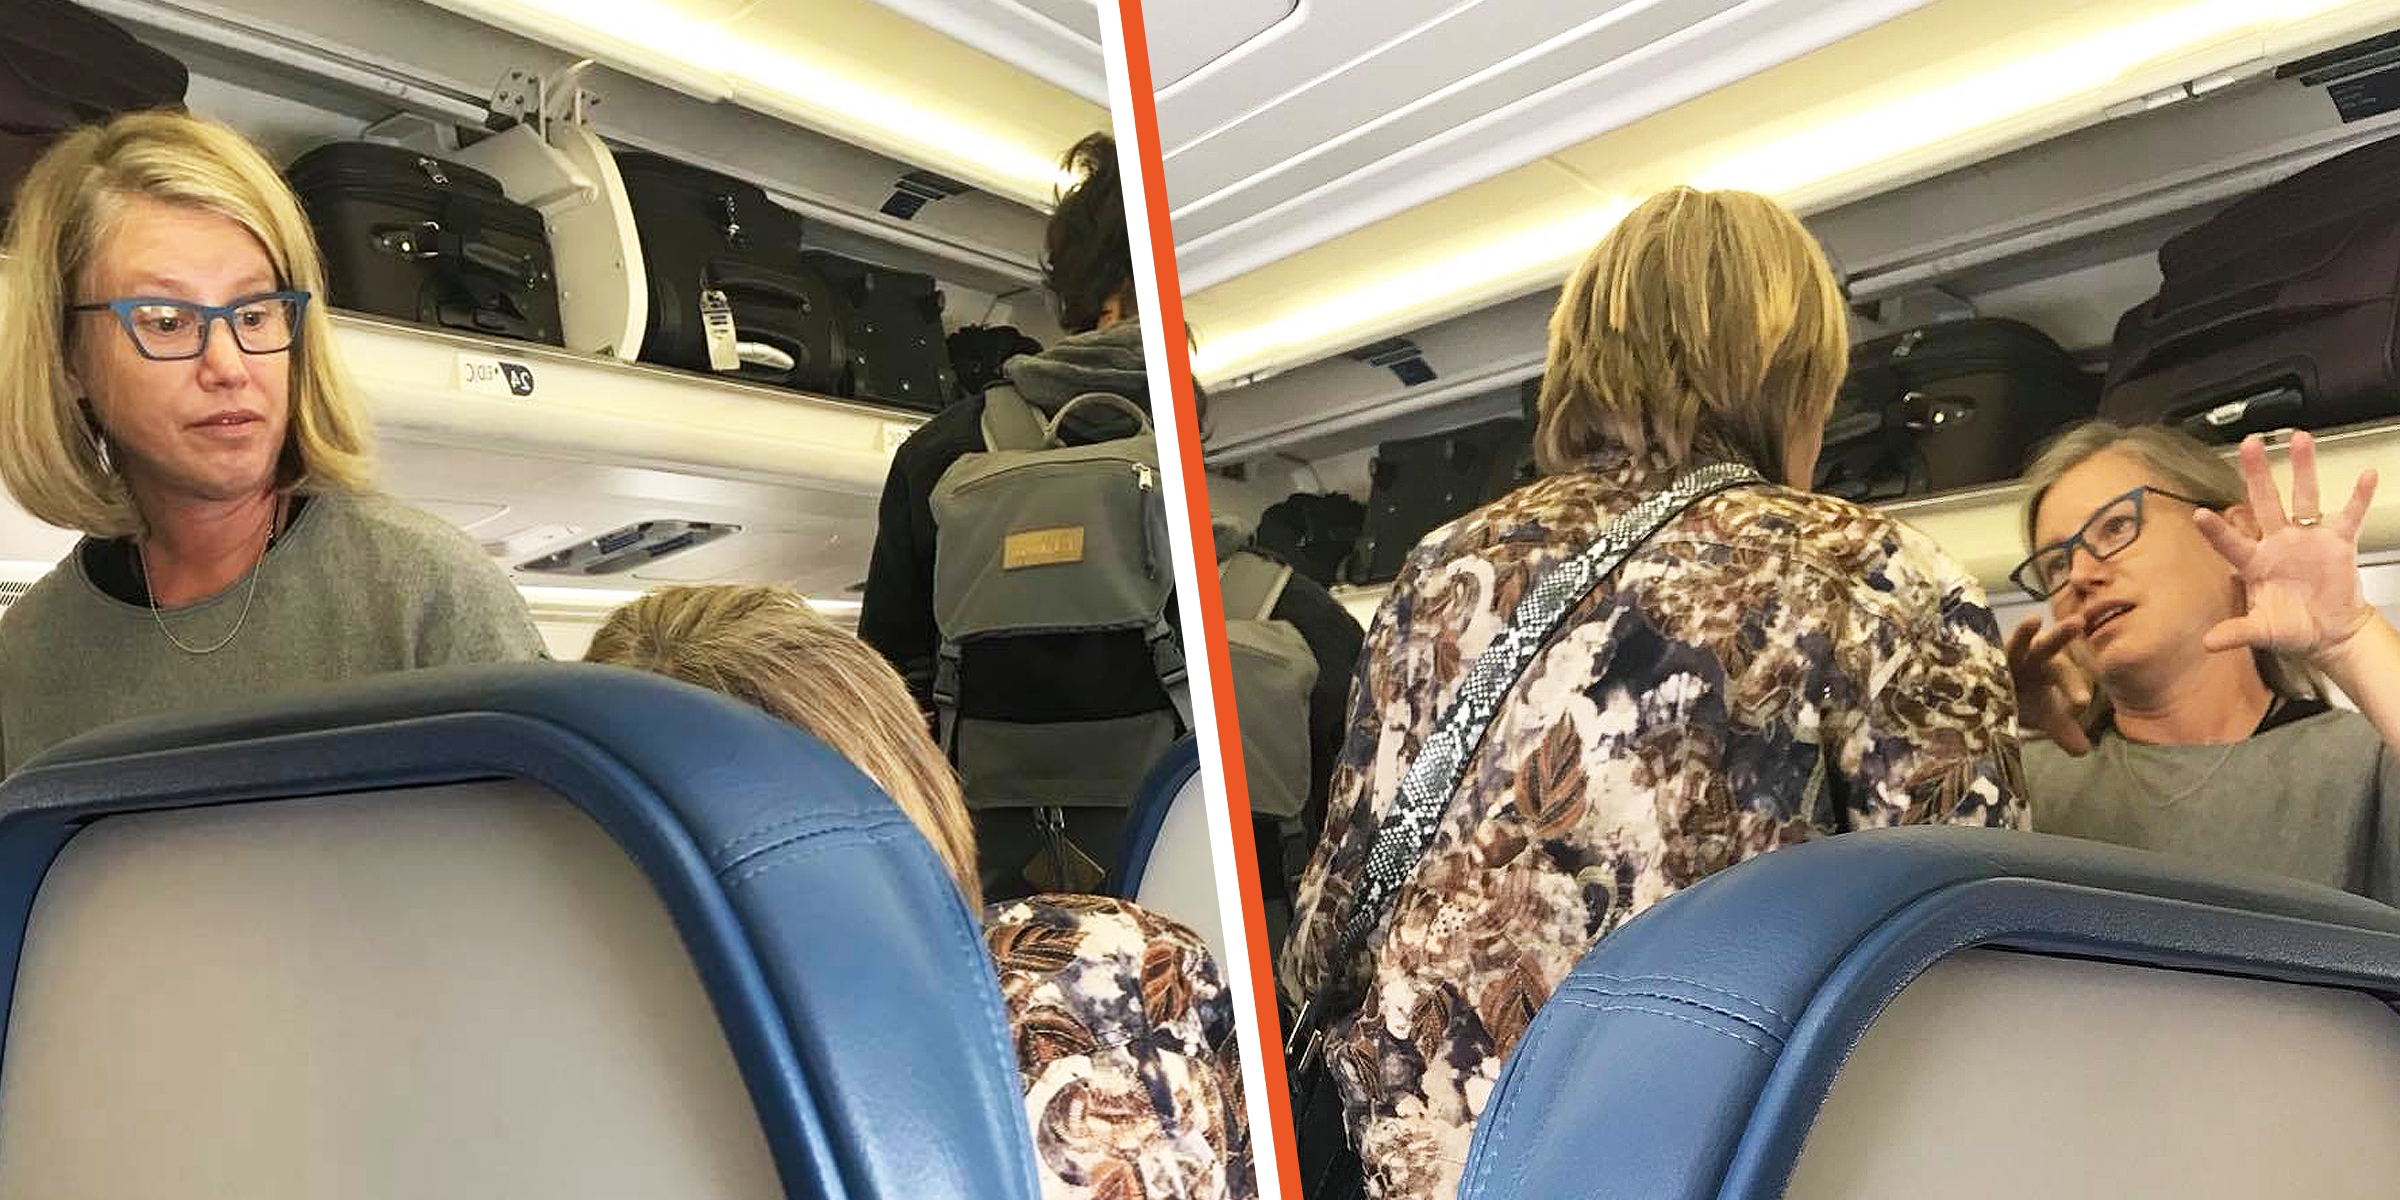 A Woman Comforting a Distraught Stranger on a Minneapolis Flight, 2018 | Source: Facebook.com/Tom Scholzen